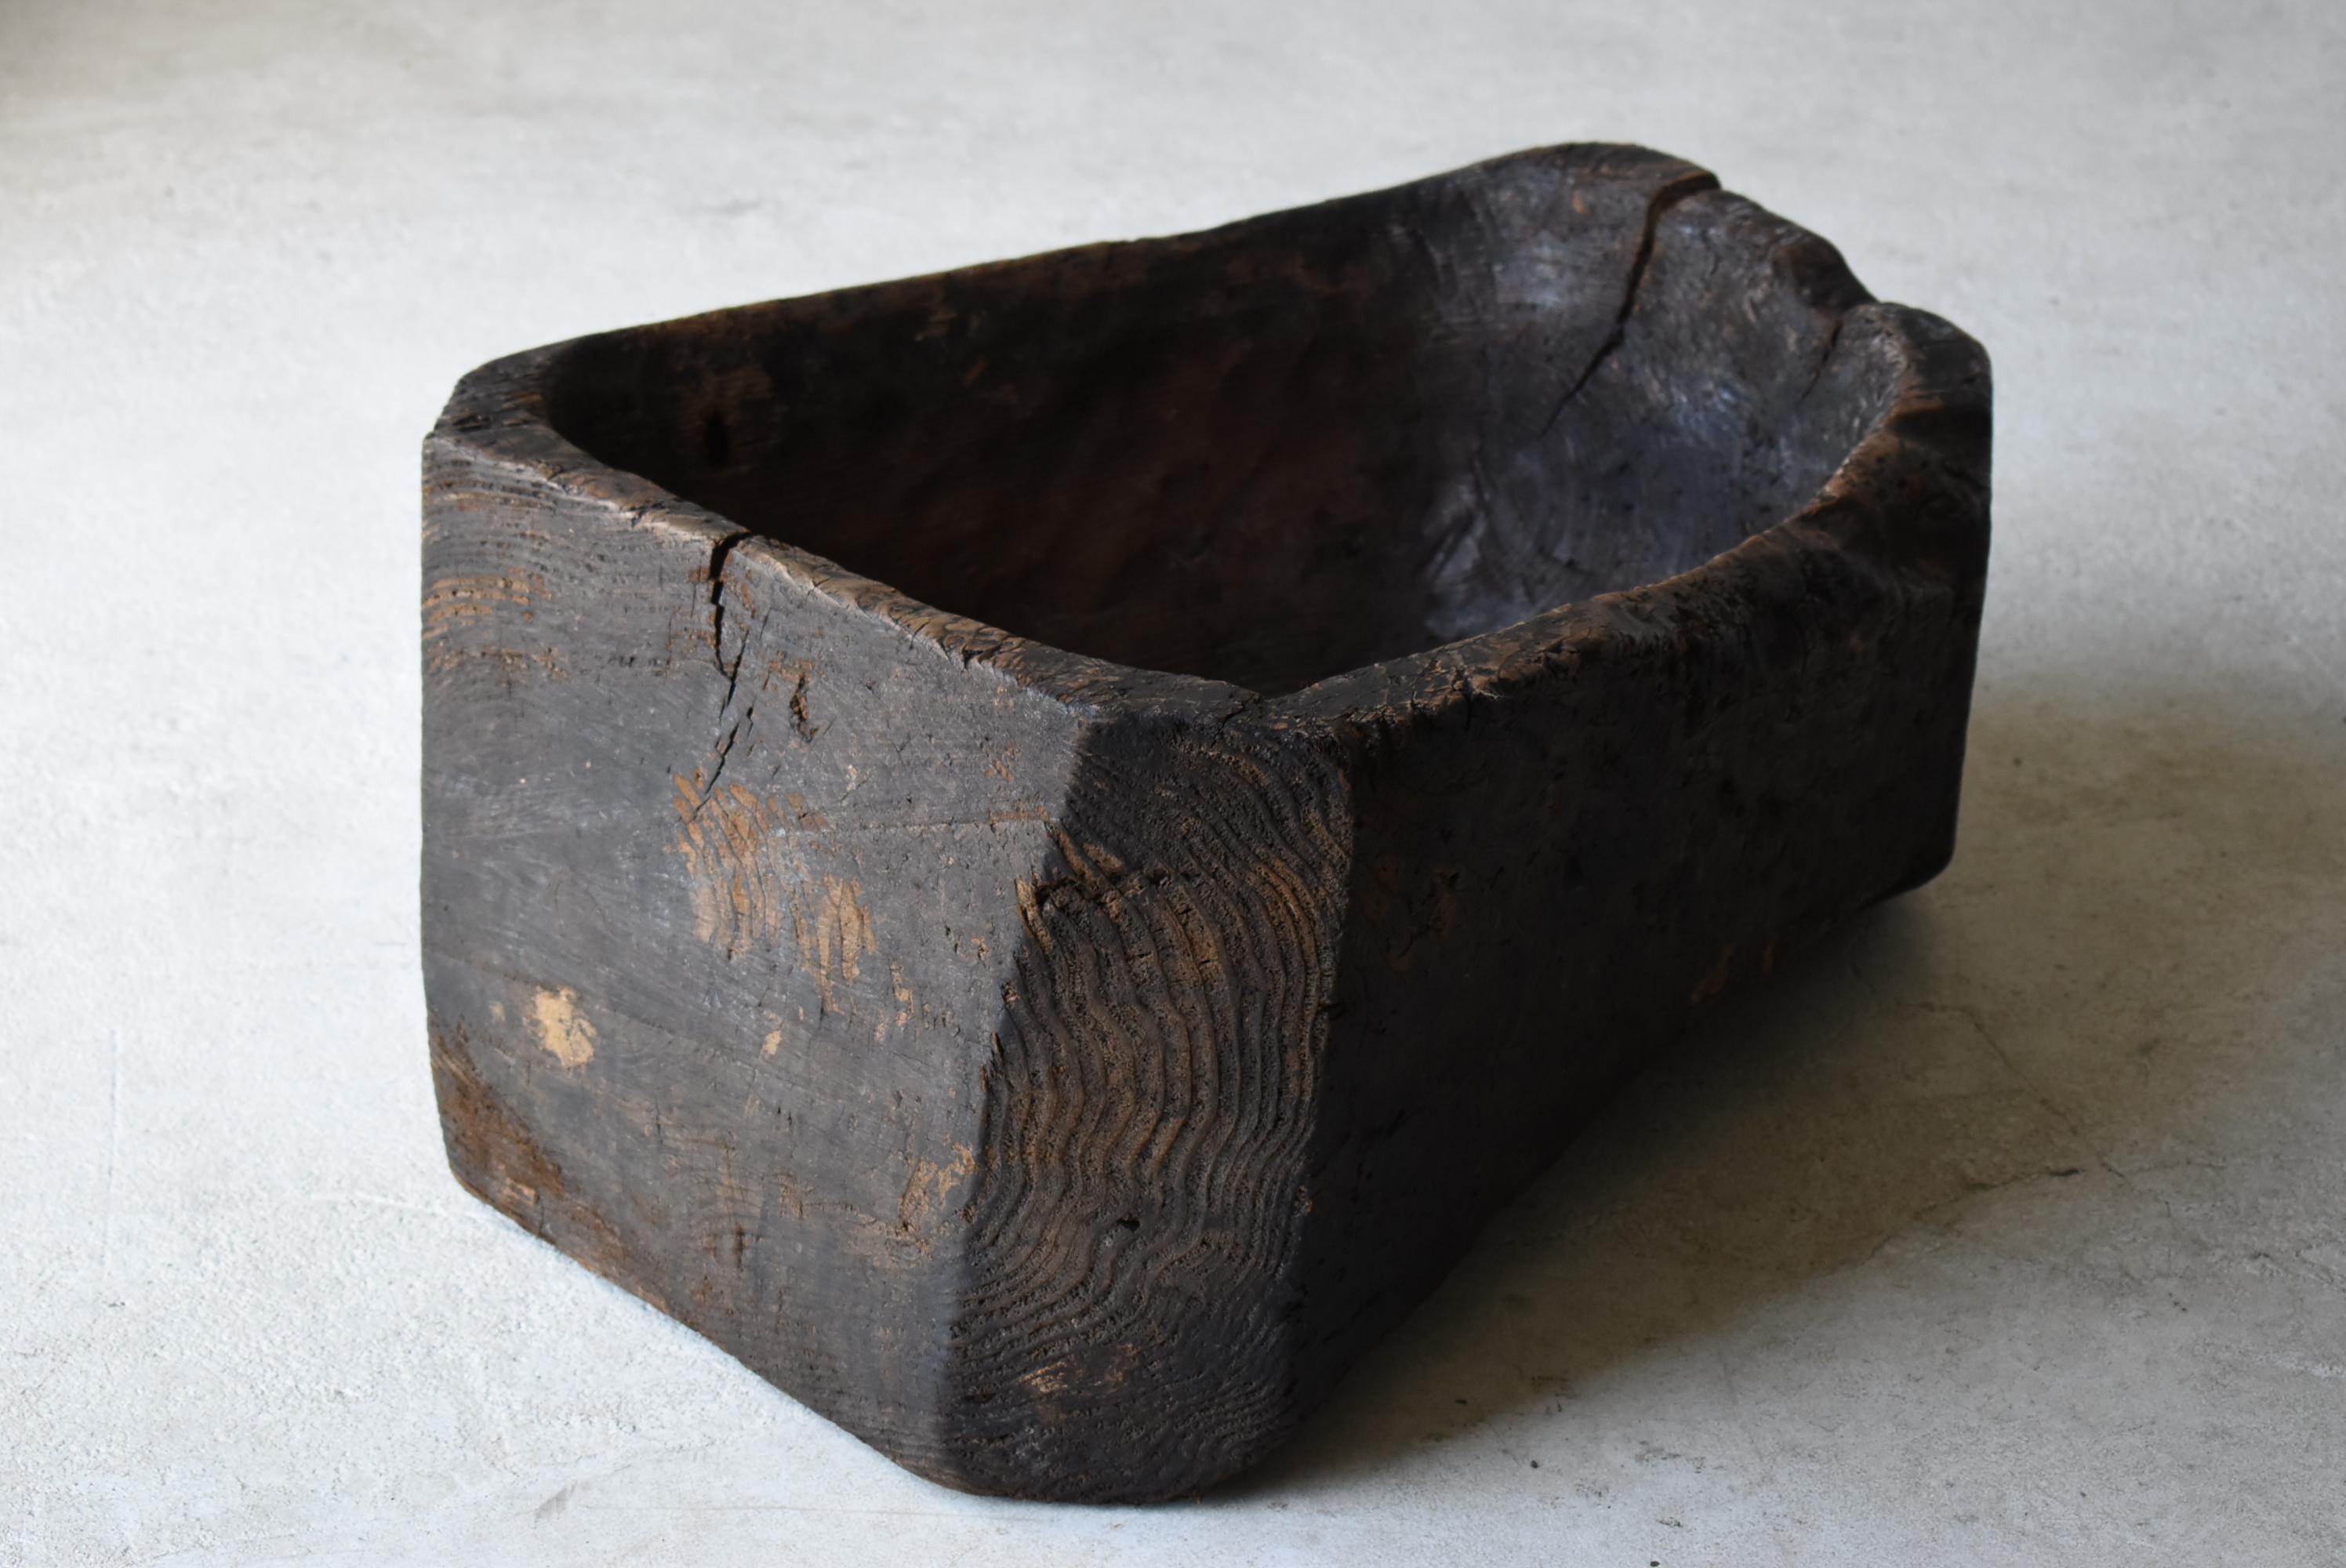 20th Century Japanese Antique Primitive Wooden Bowl 1860s-1900s / Wabi Sabi Object Mingei